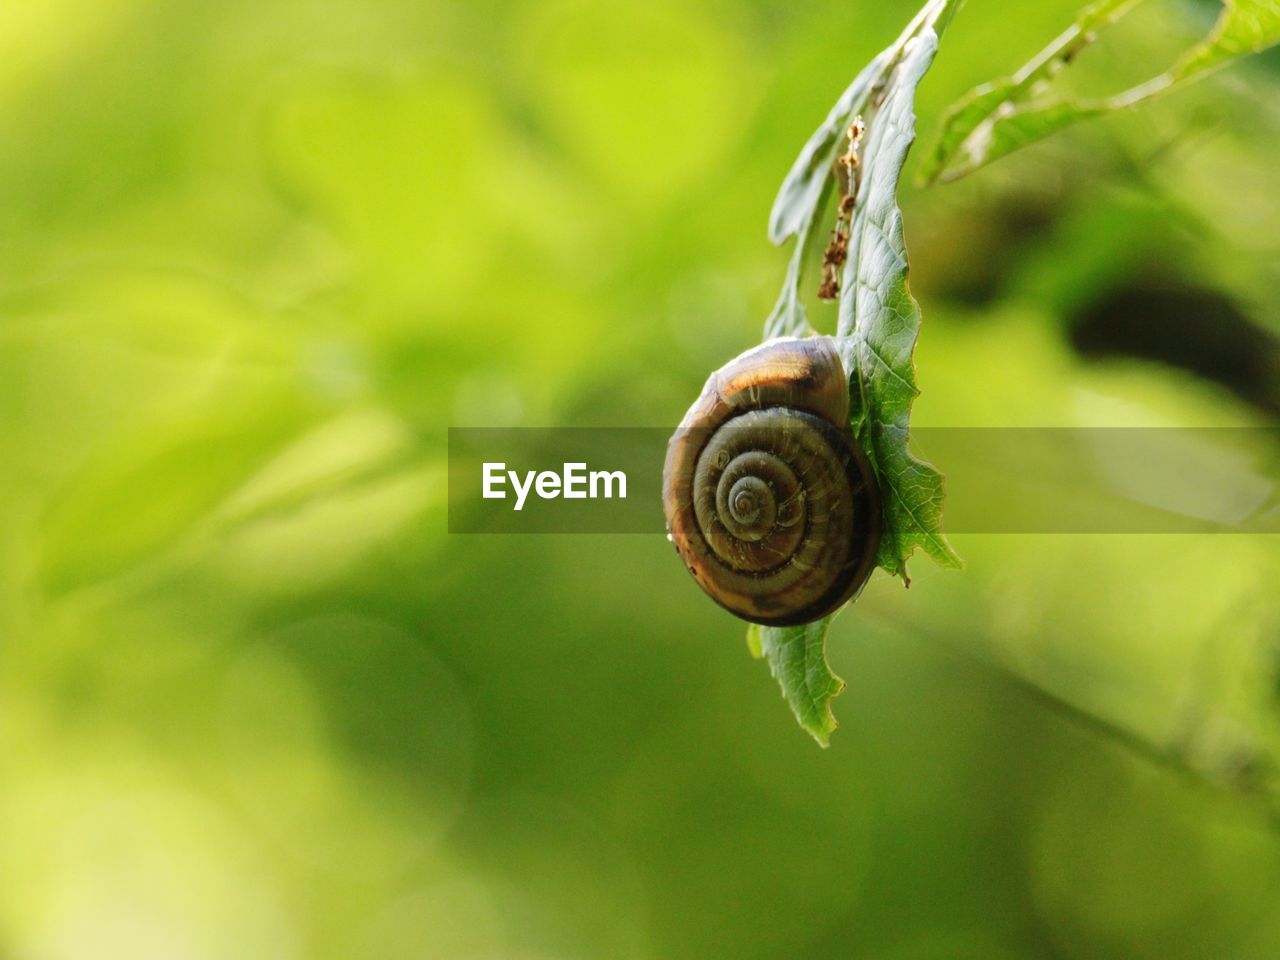 close-up of snail on leaf